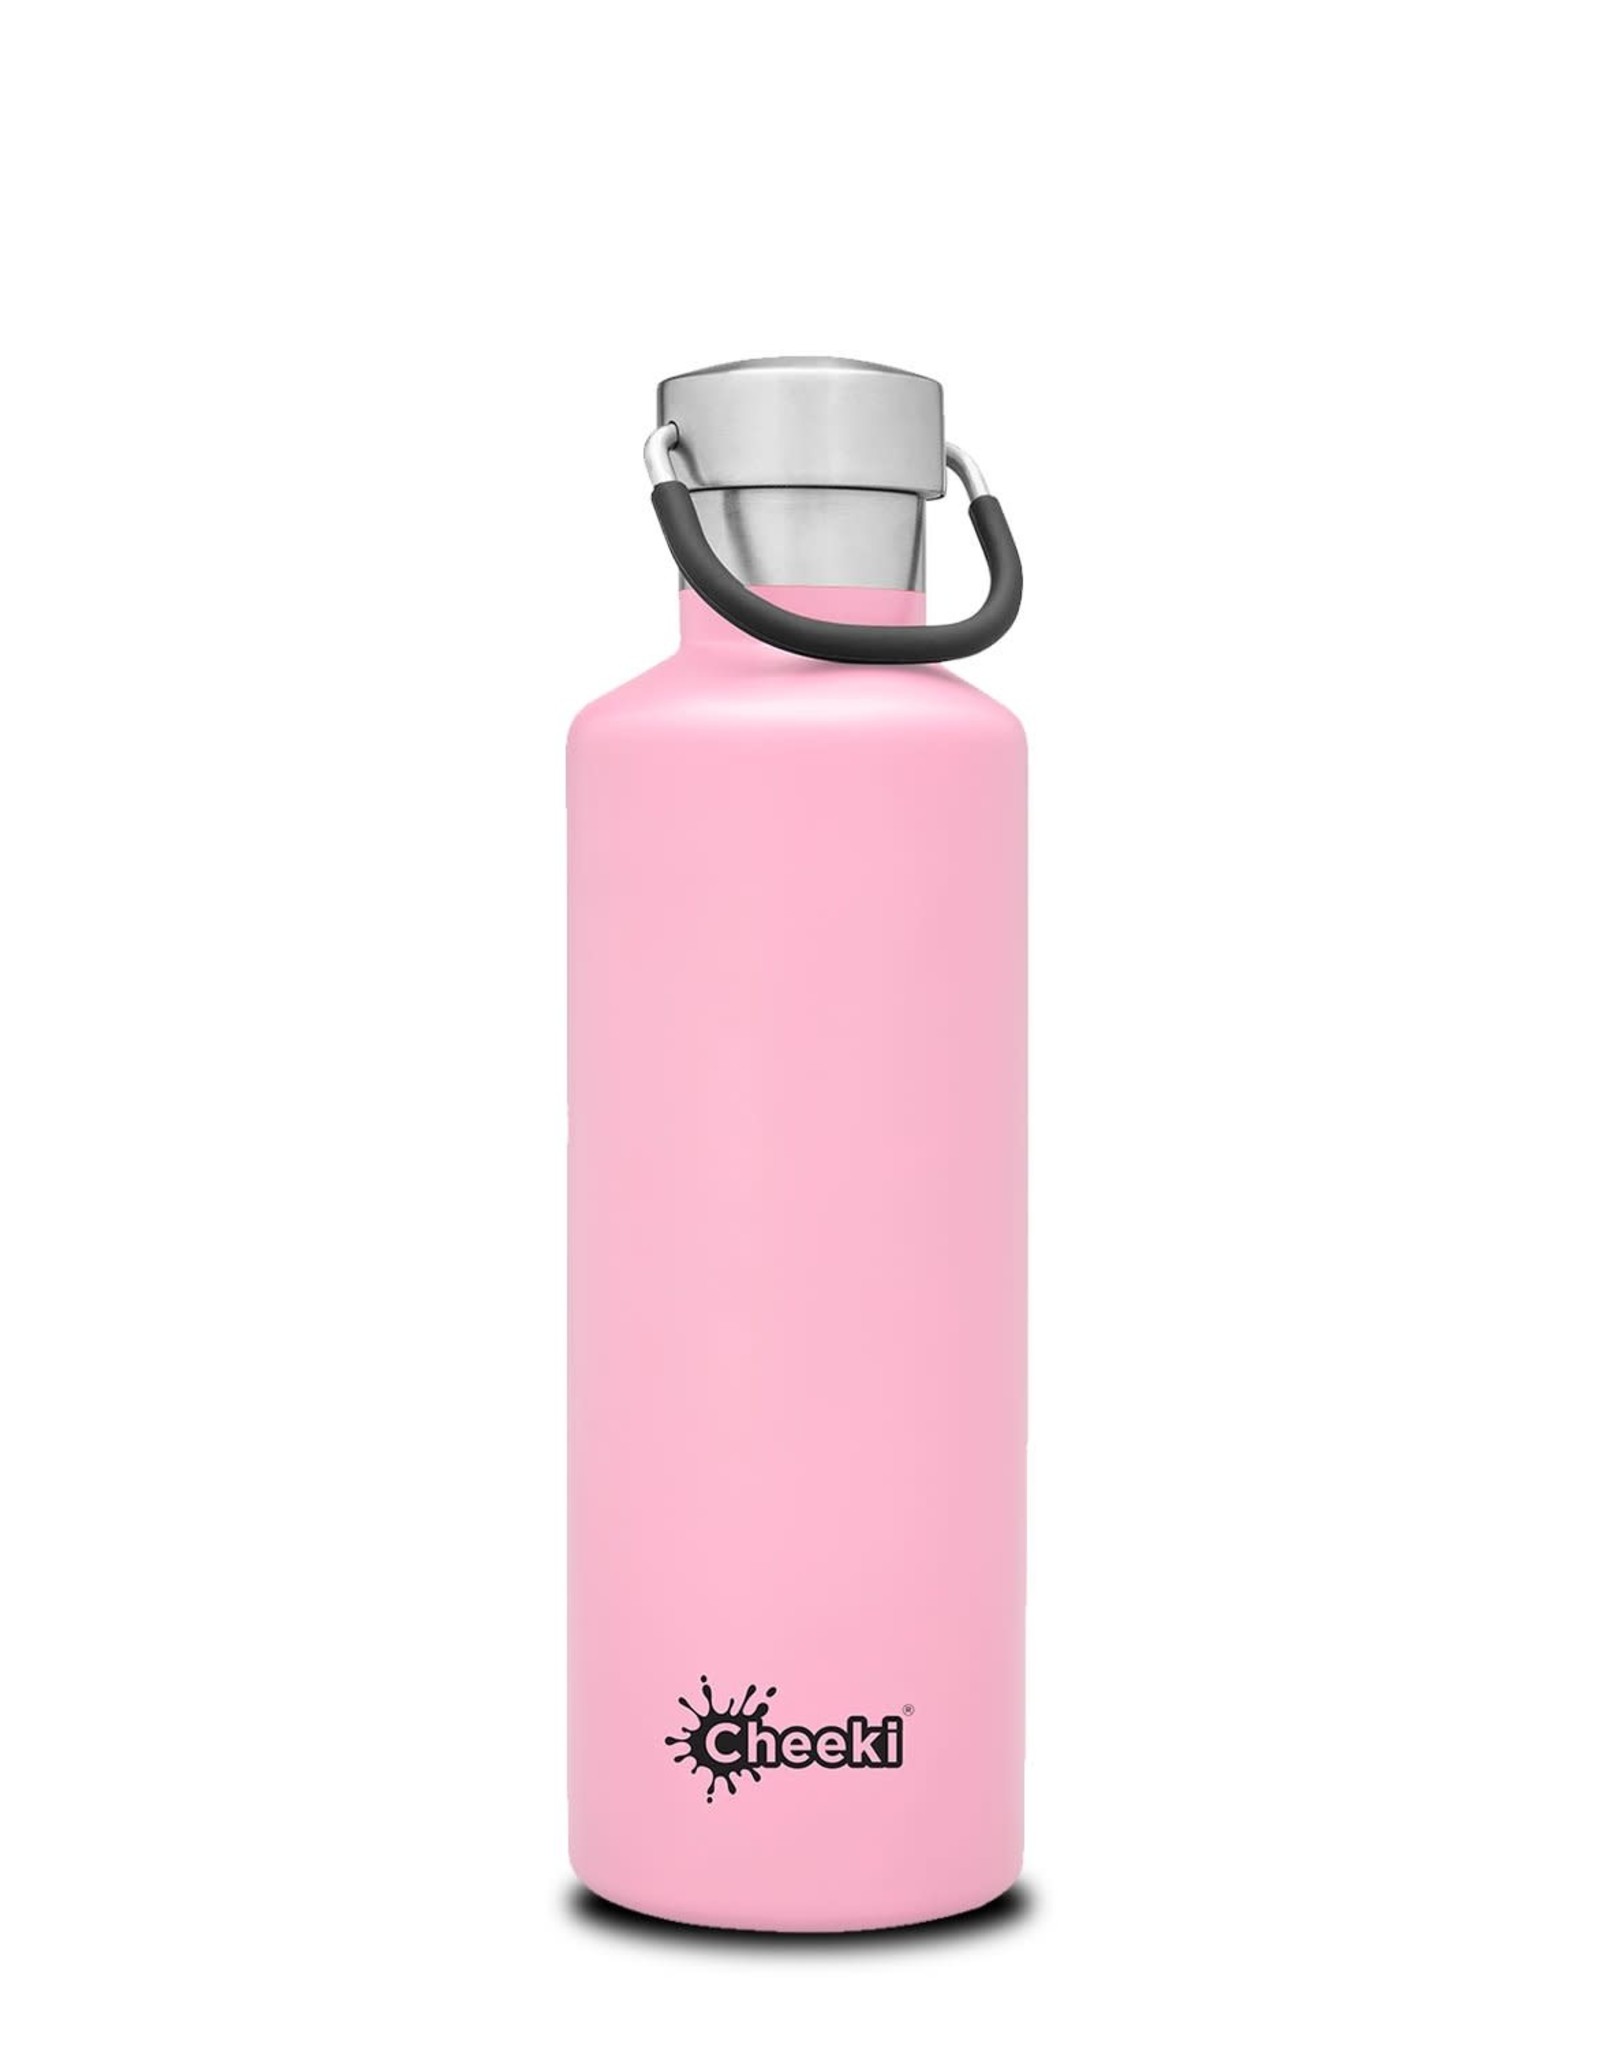 Cheeki Stainless Steel Water Bottle Insulated - 600ml